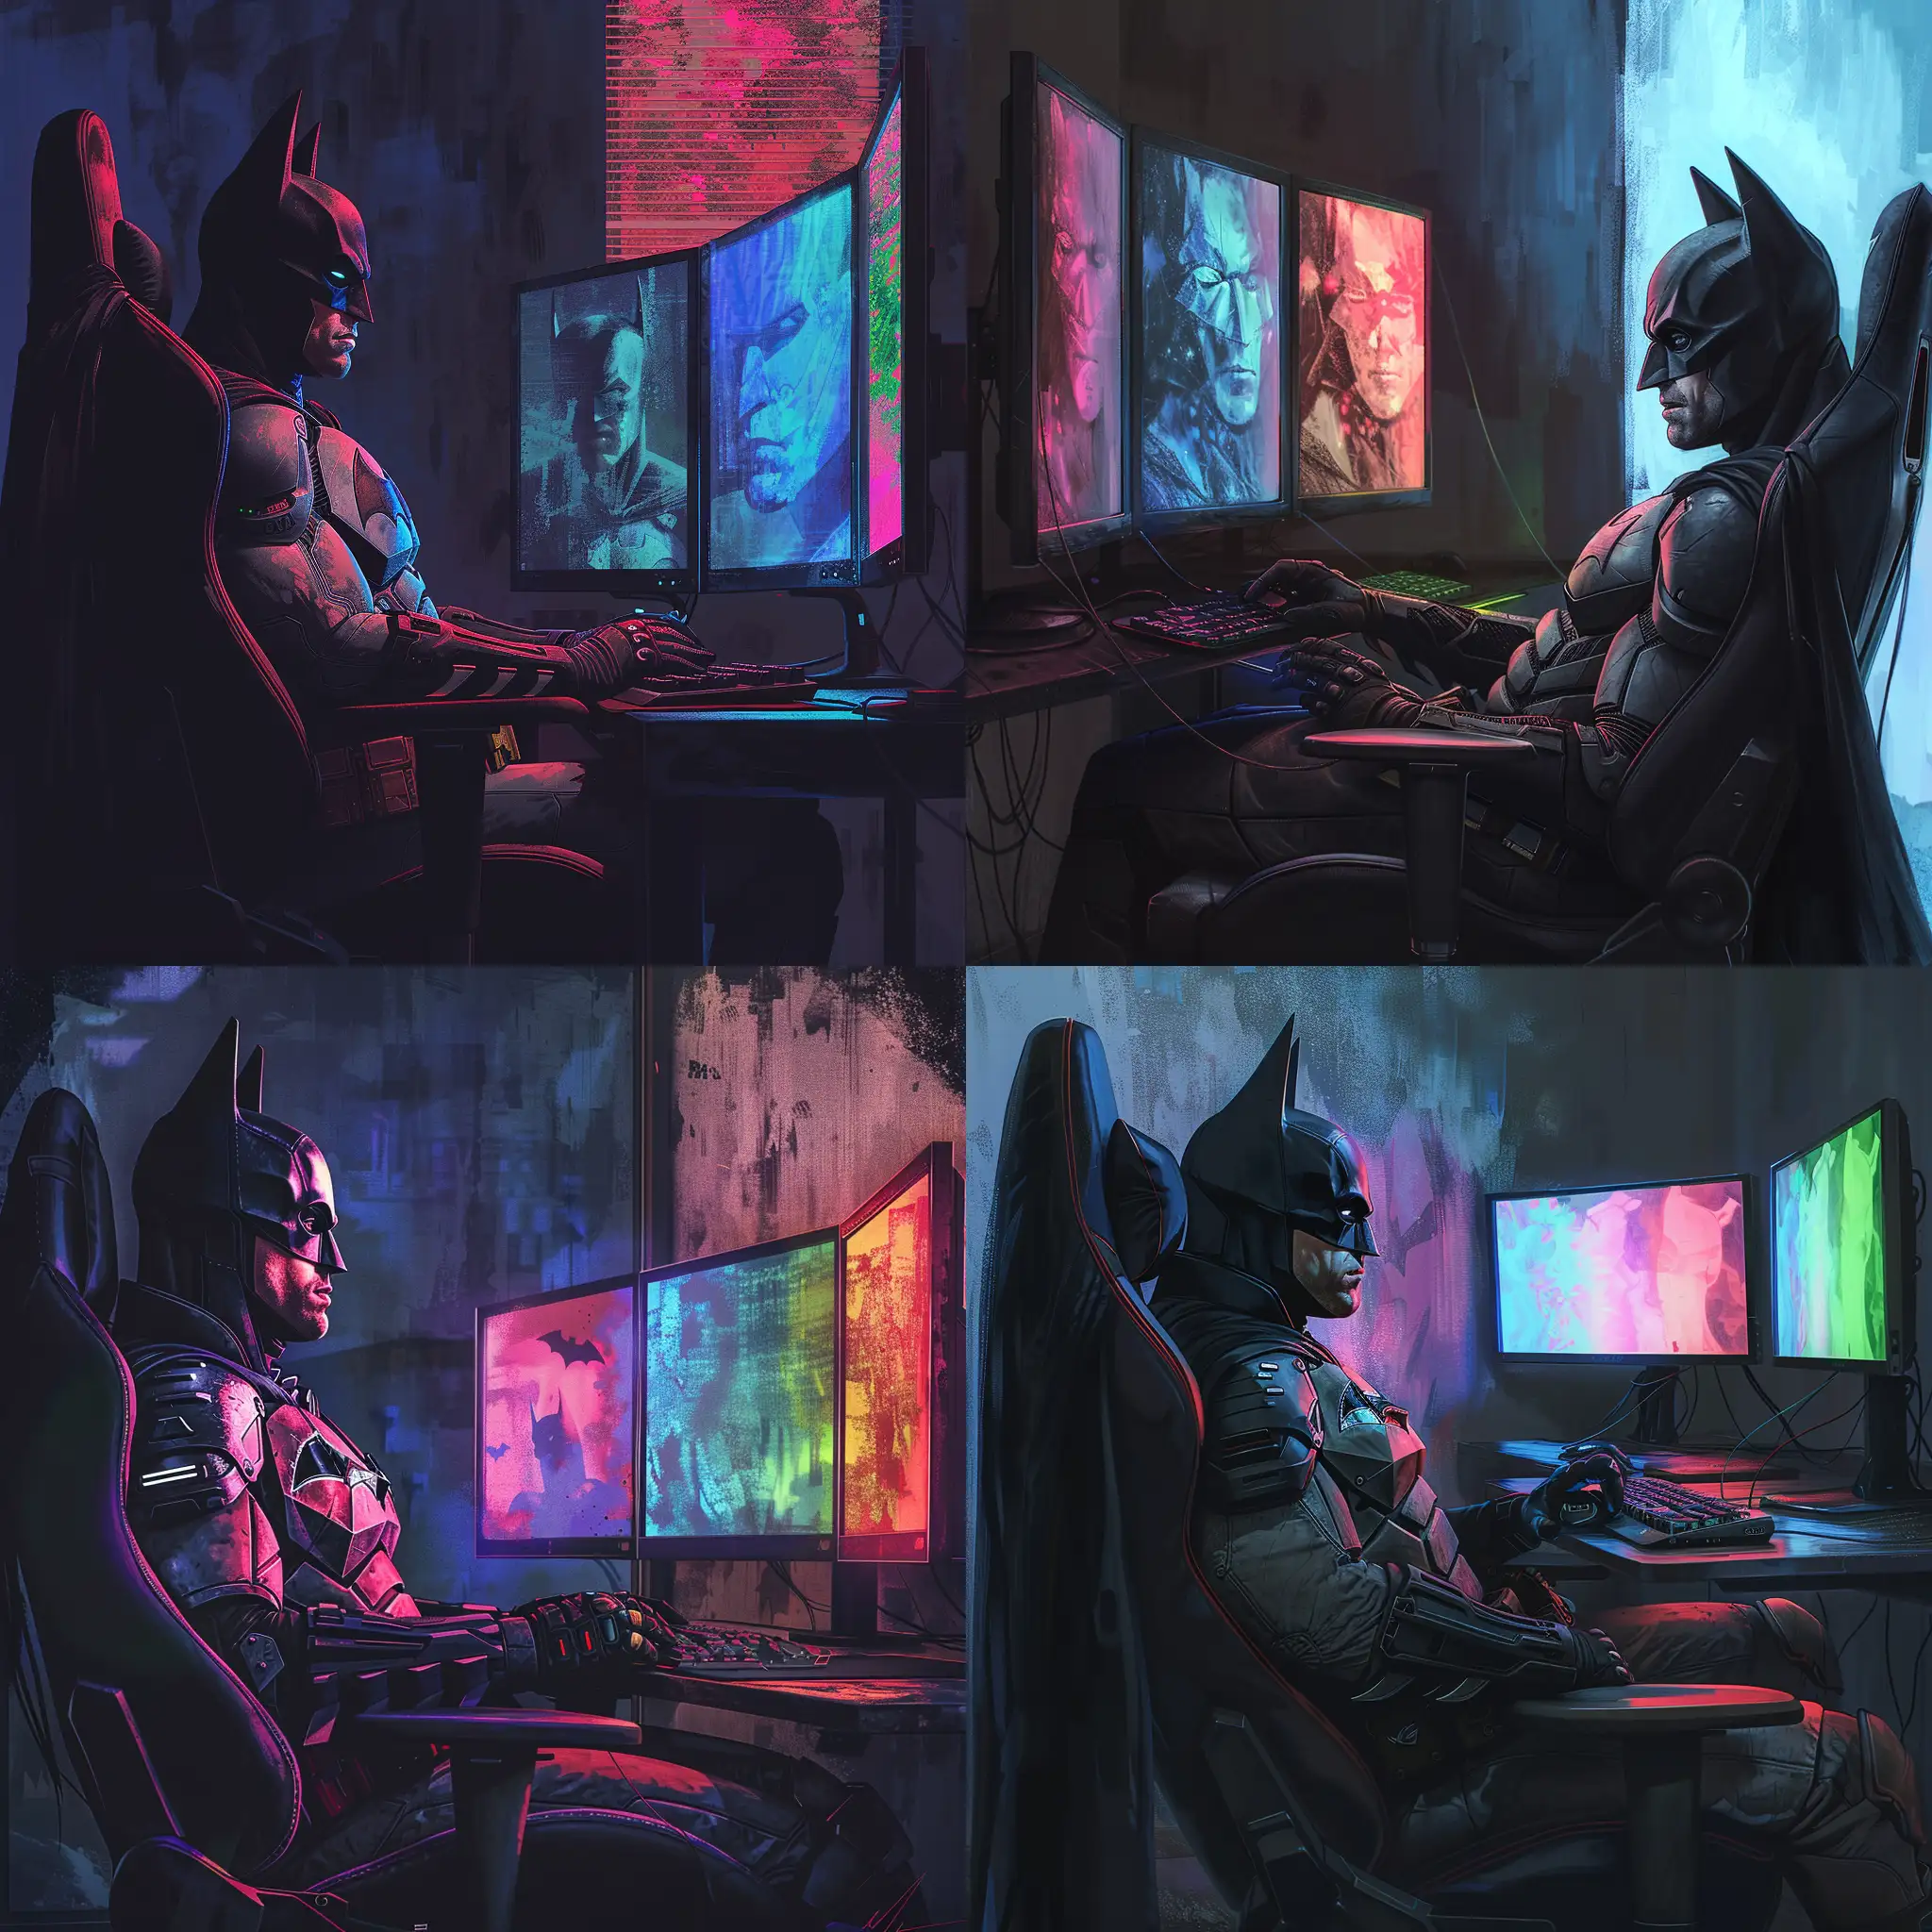 Batman-Gaming-in-High-Definition-Dark-Room-Setup-with-Three-Screens